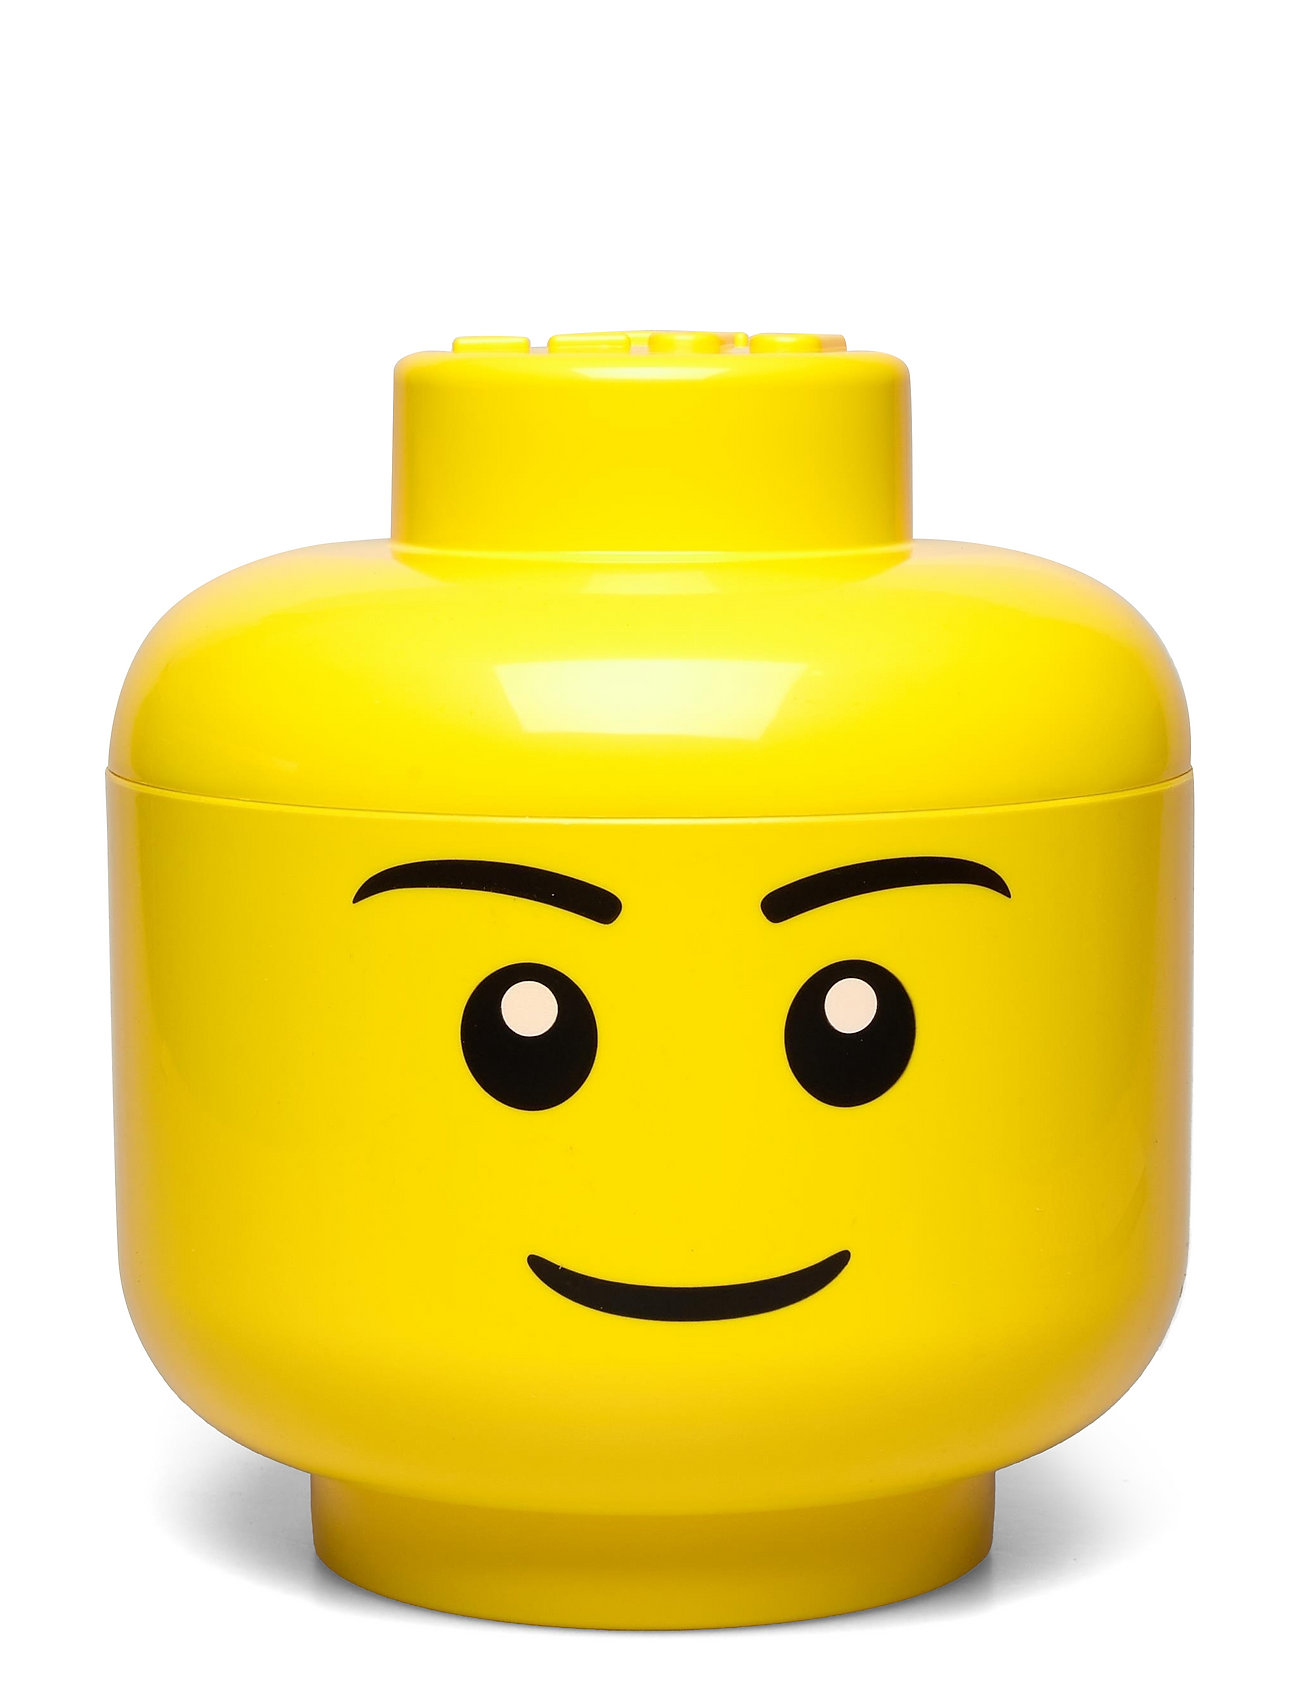 Lego Storage Head  Home Kids Decor Storage Storage Boxes Yellow LEGO STORAGE